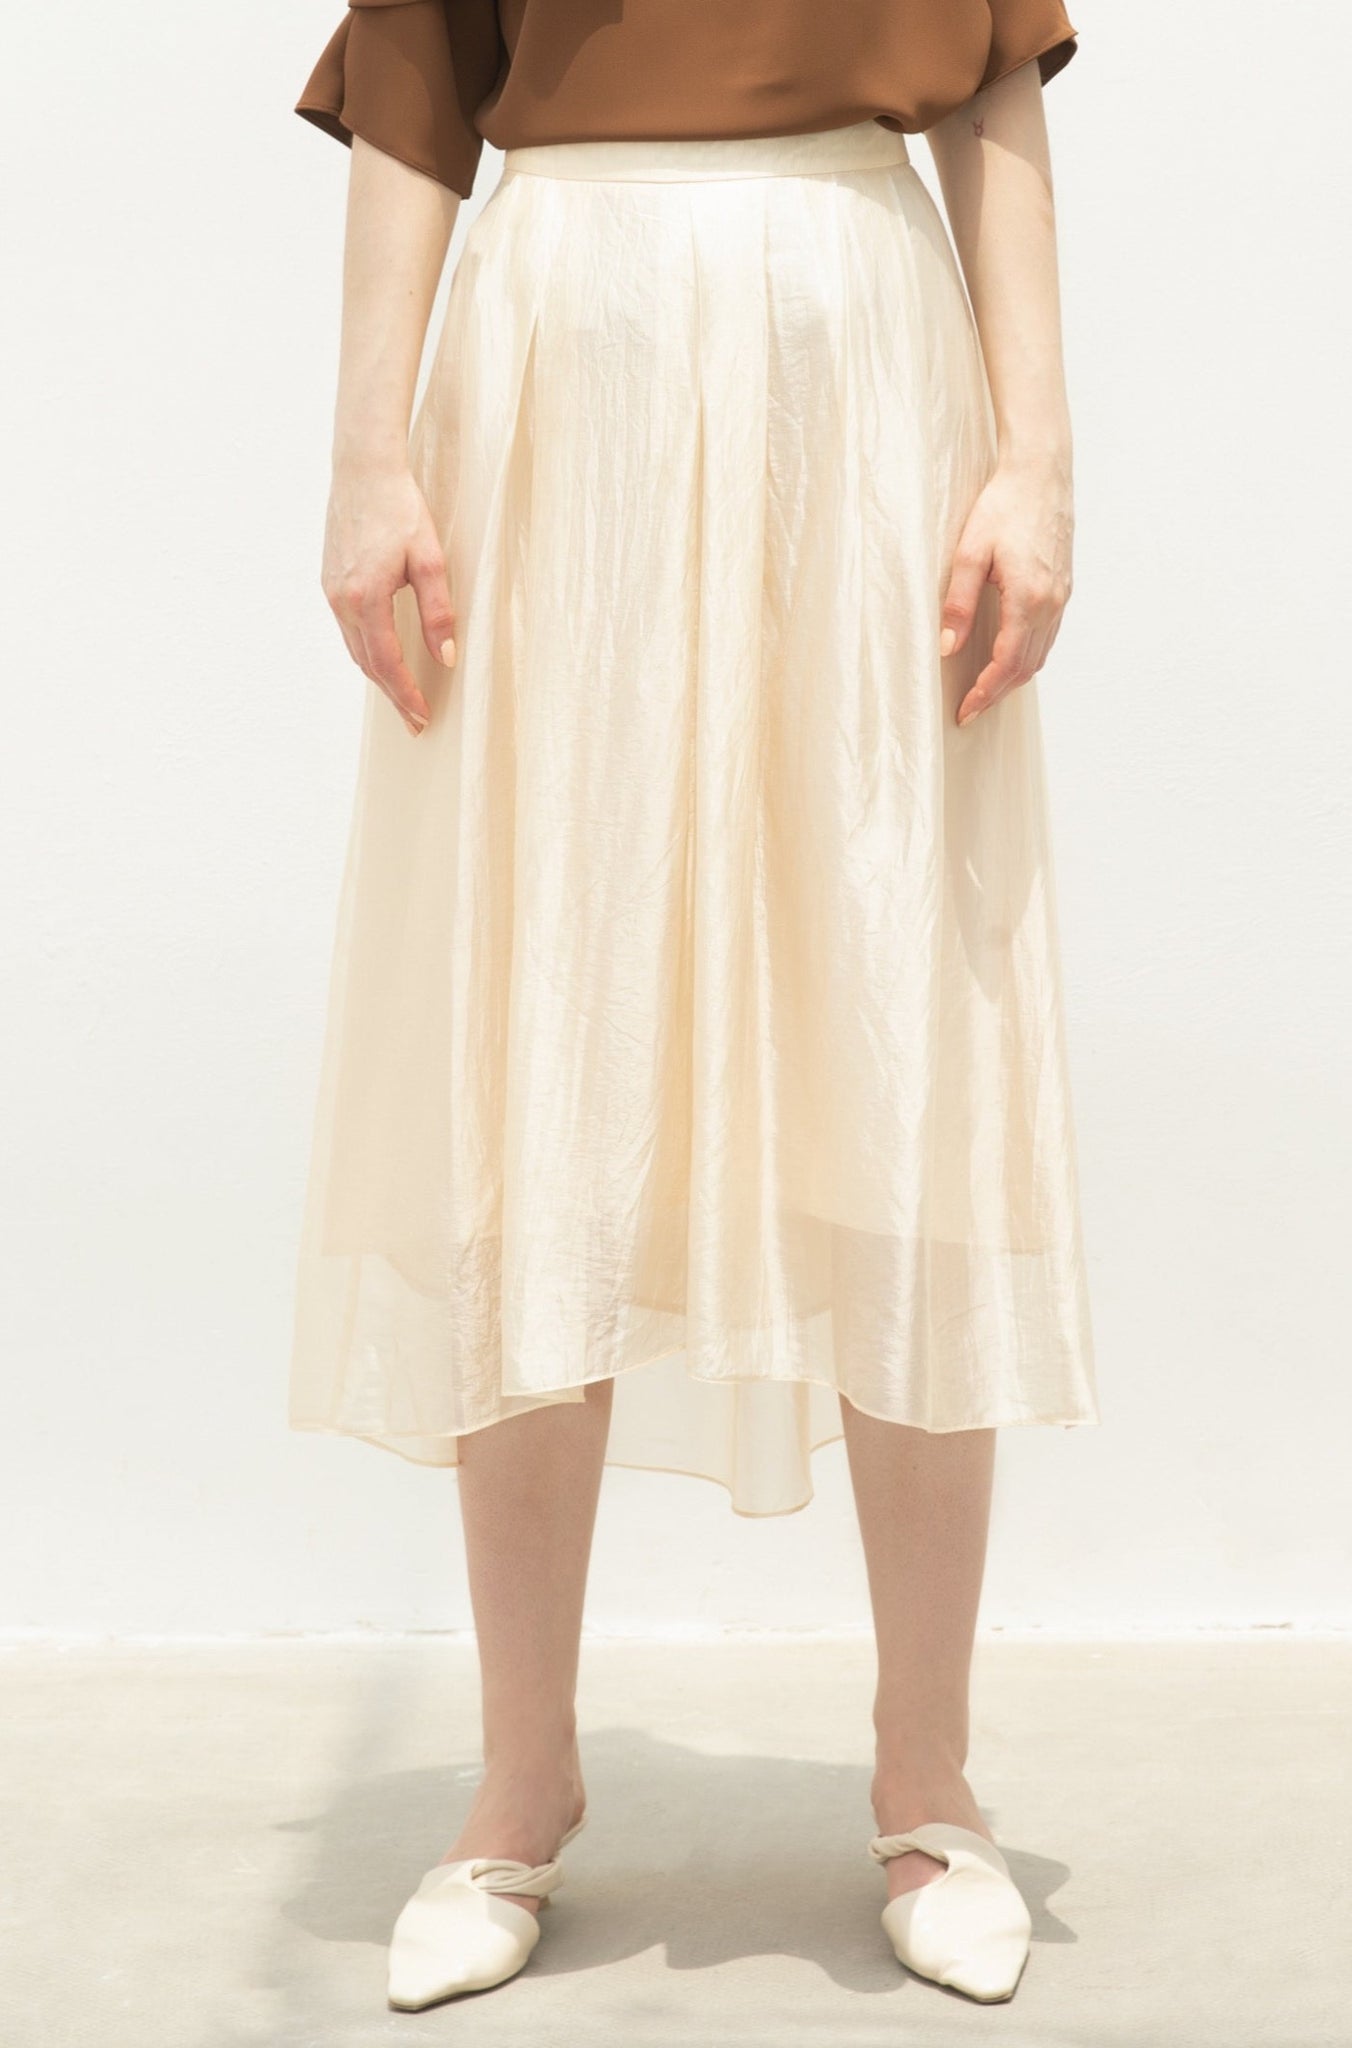 LINDONG | Noelie Apricot Flared Skirt